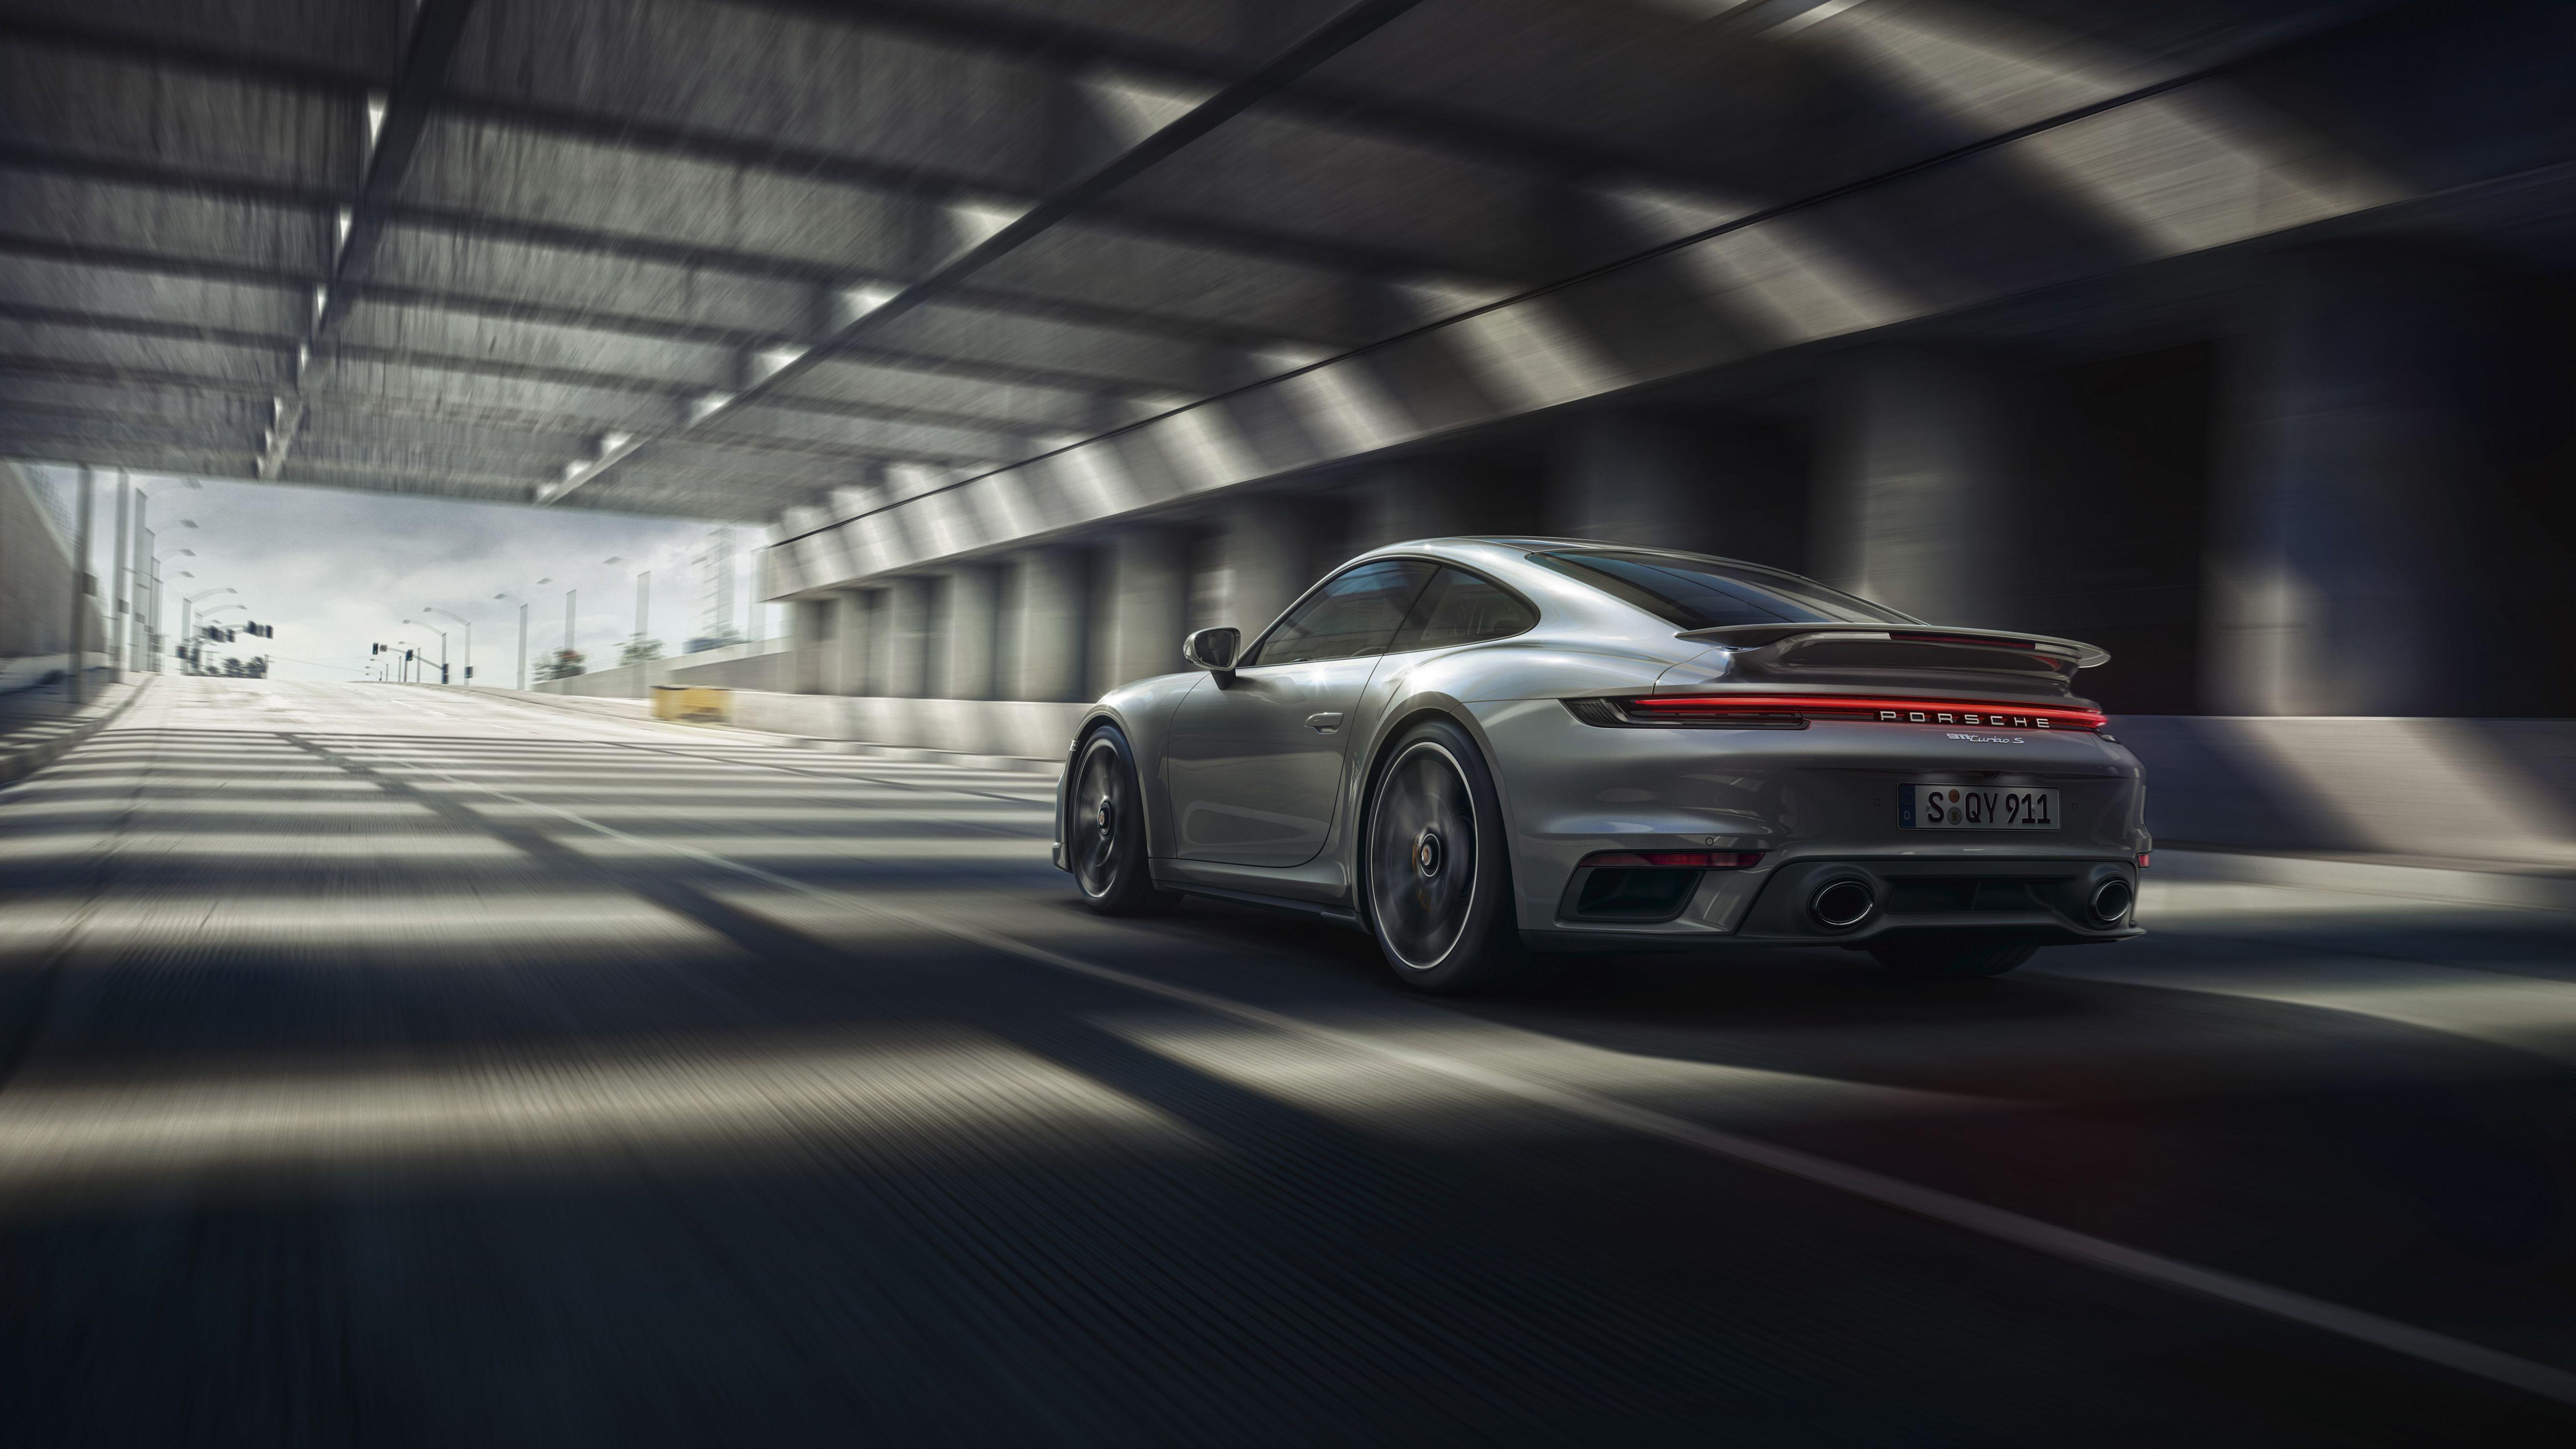 Porsche Turbo S Wallpapers Top Free Porsche Turbo S Backgrounds Wallpaperaccess